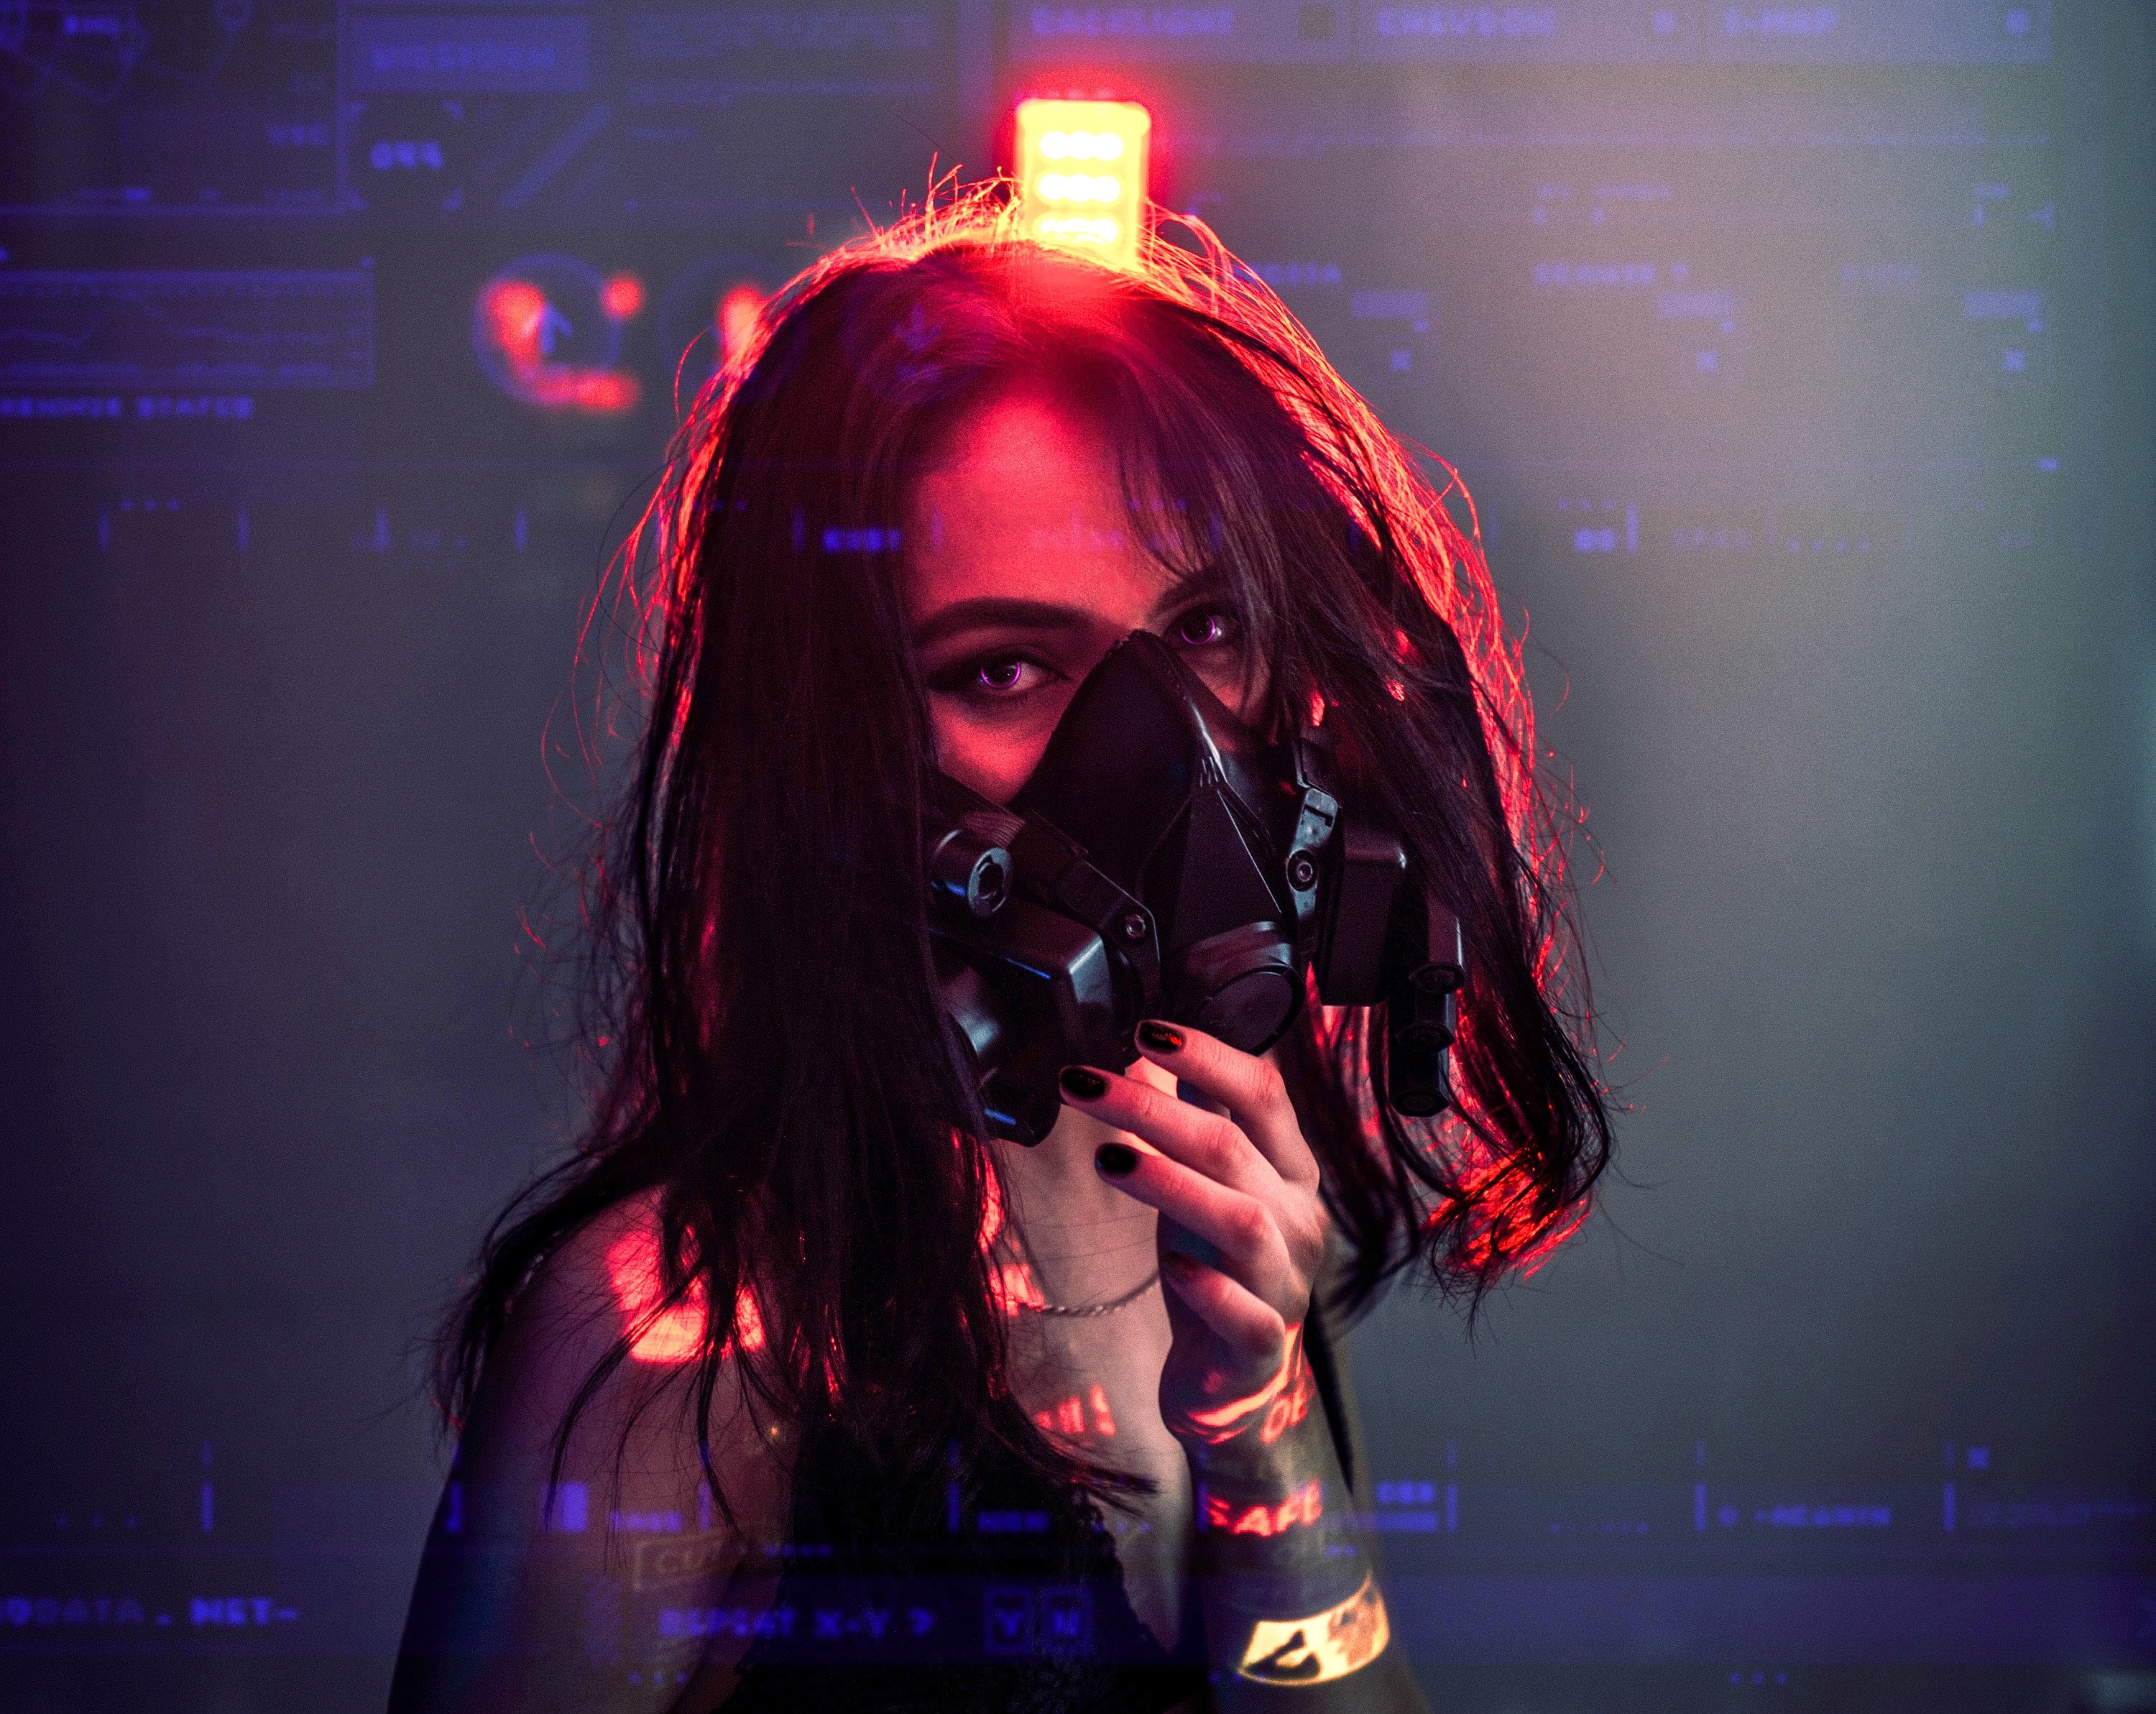 Sci Fi Cyberpunk Girl With Gas Mask High Definition Wallpaper 5157